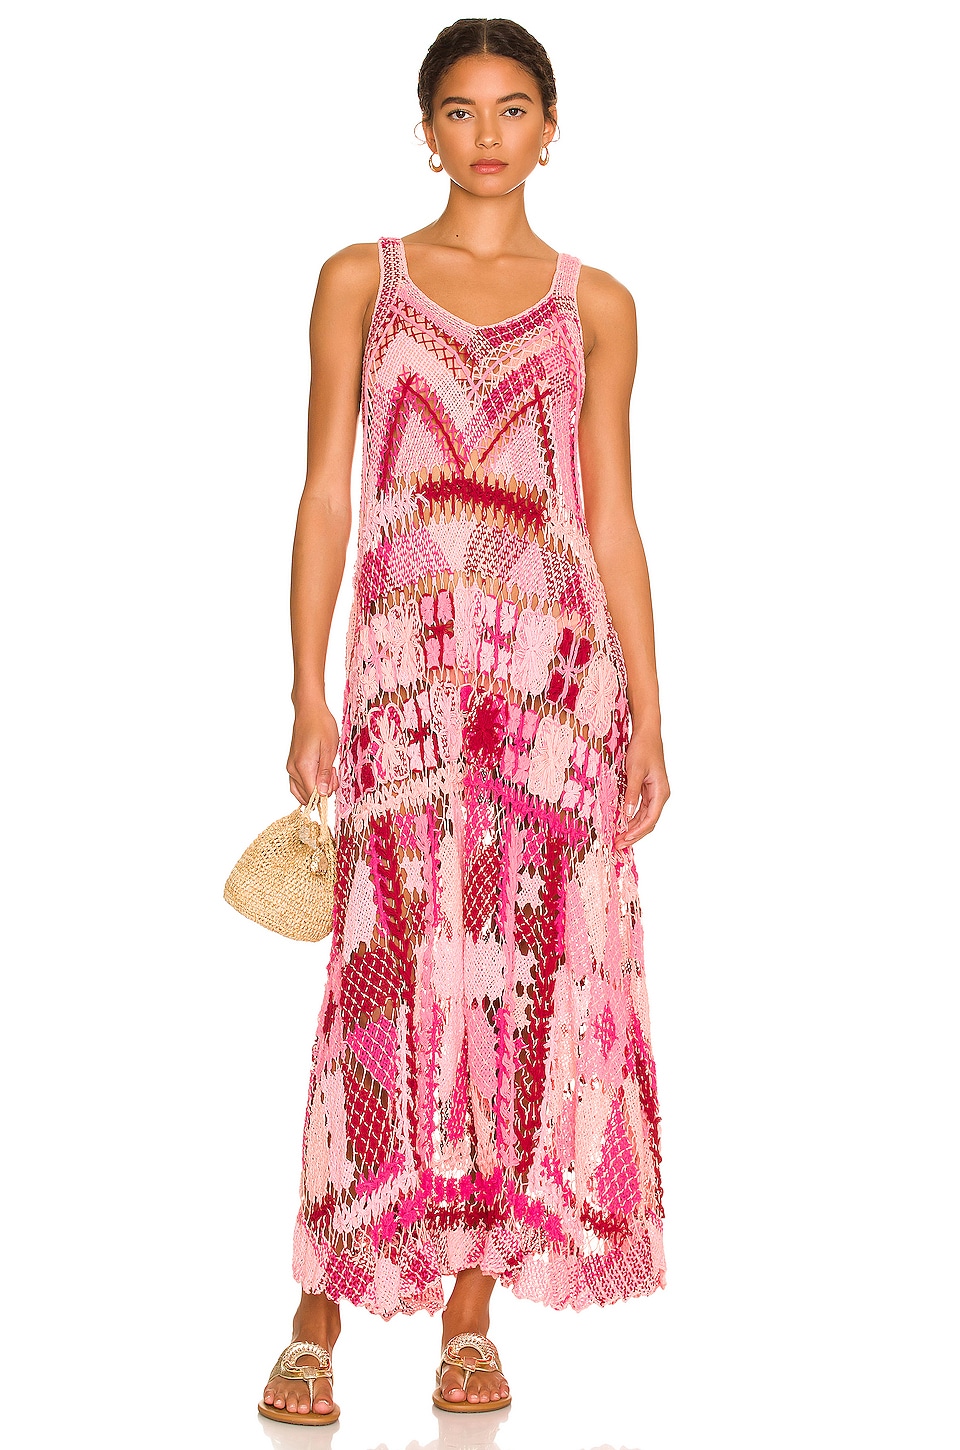 Alix Pinho Laura Dress in Pink | REVOLVE